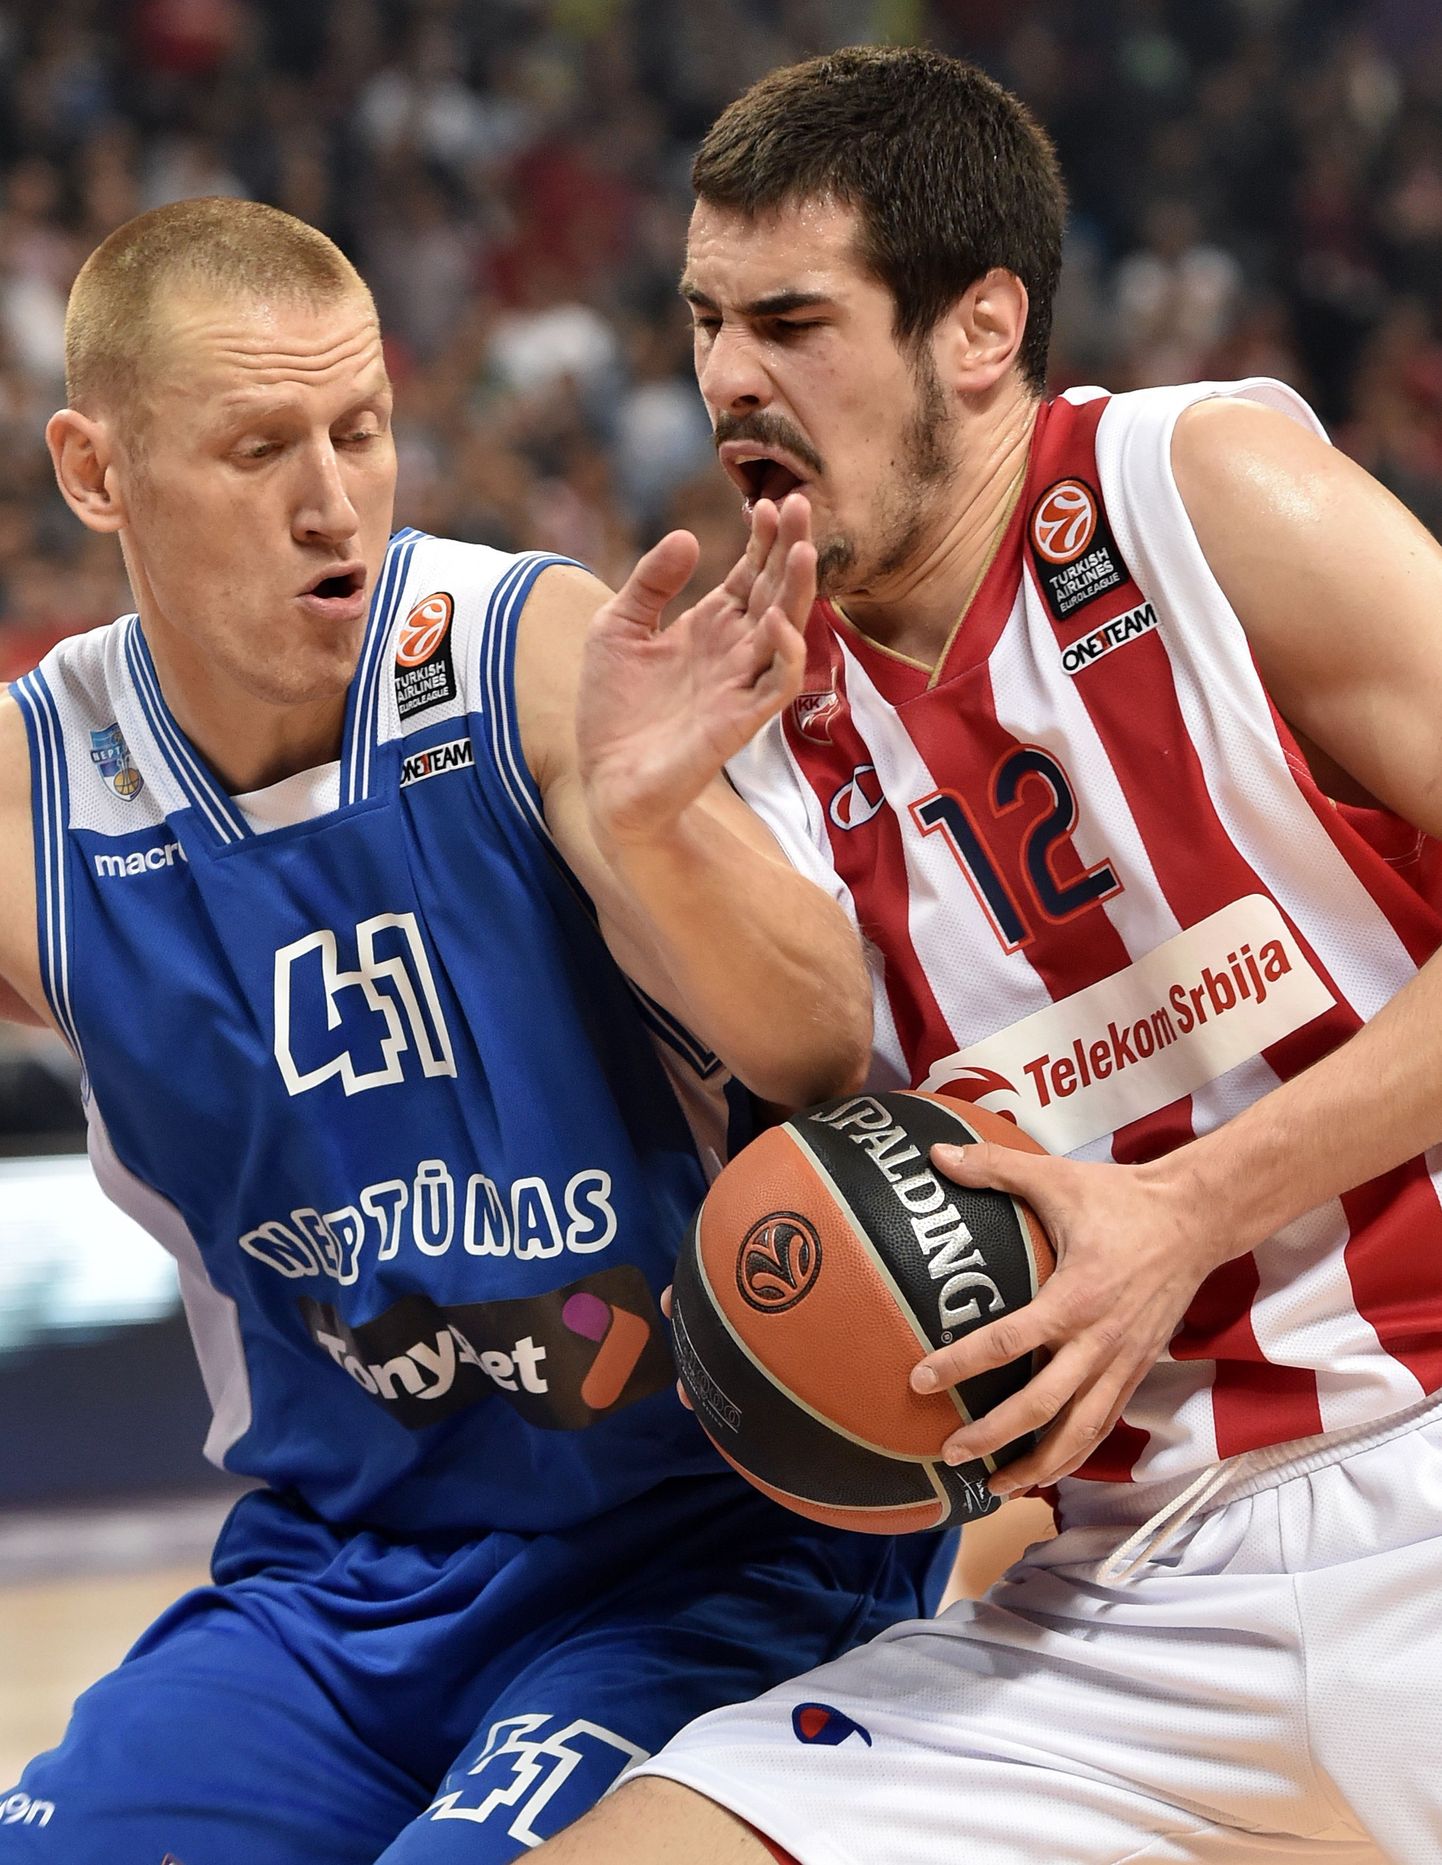 Klaipeda Neptunase mängija Donatas Zavackas (vasakul) võitleb Belgradi Crvena Zvezda mängumehe Nikola Kaliniciga.